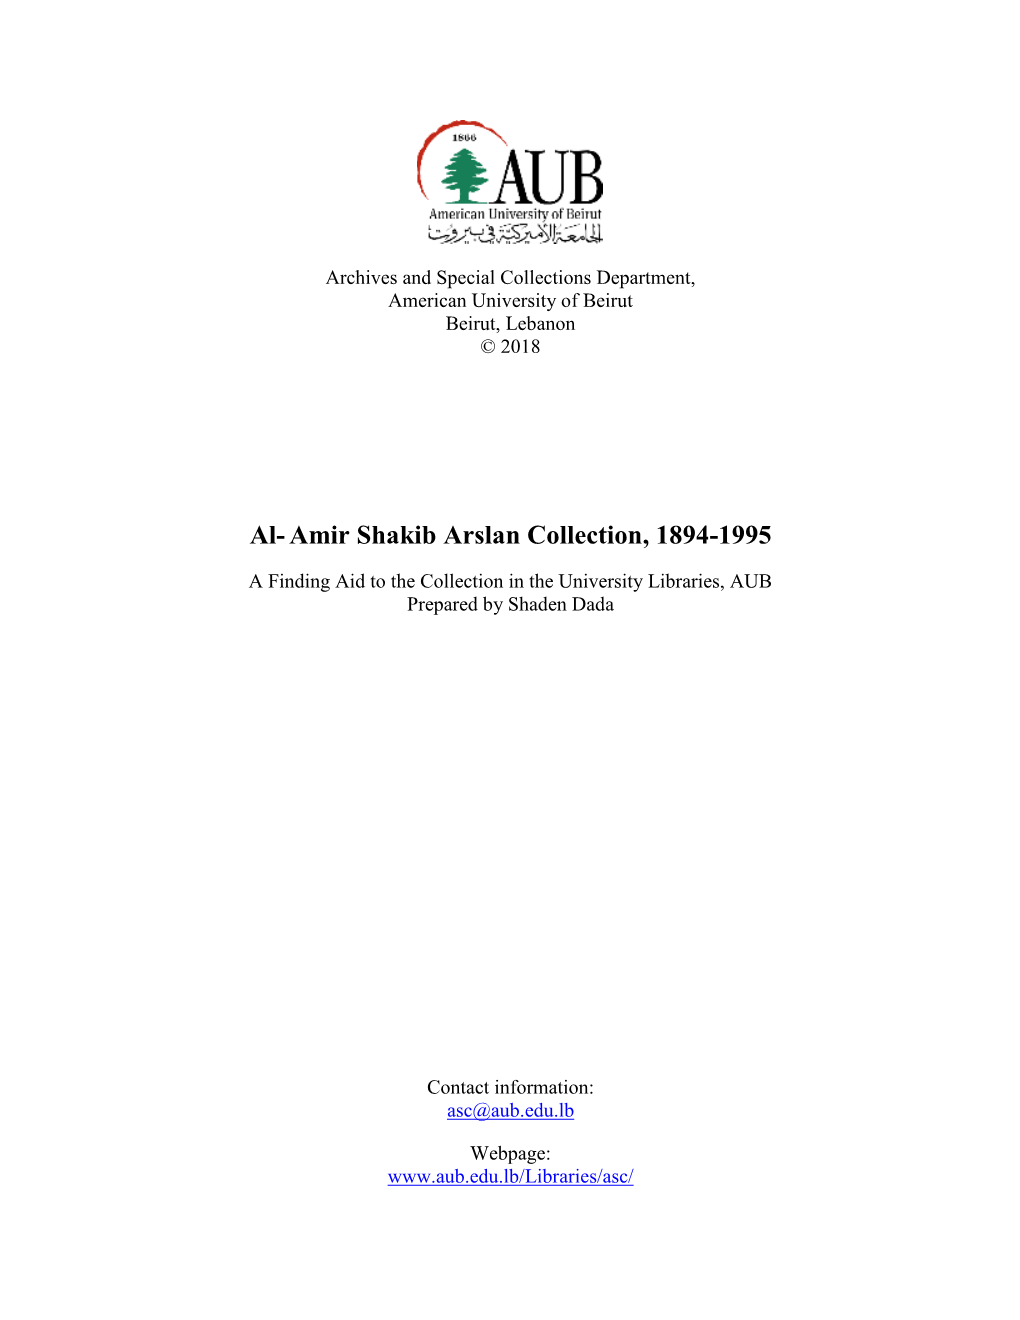 Al-Amir Shakib Arslan Collection, 1894-1995